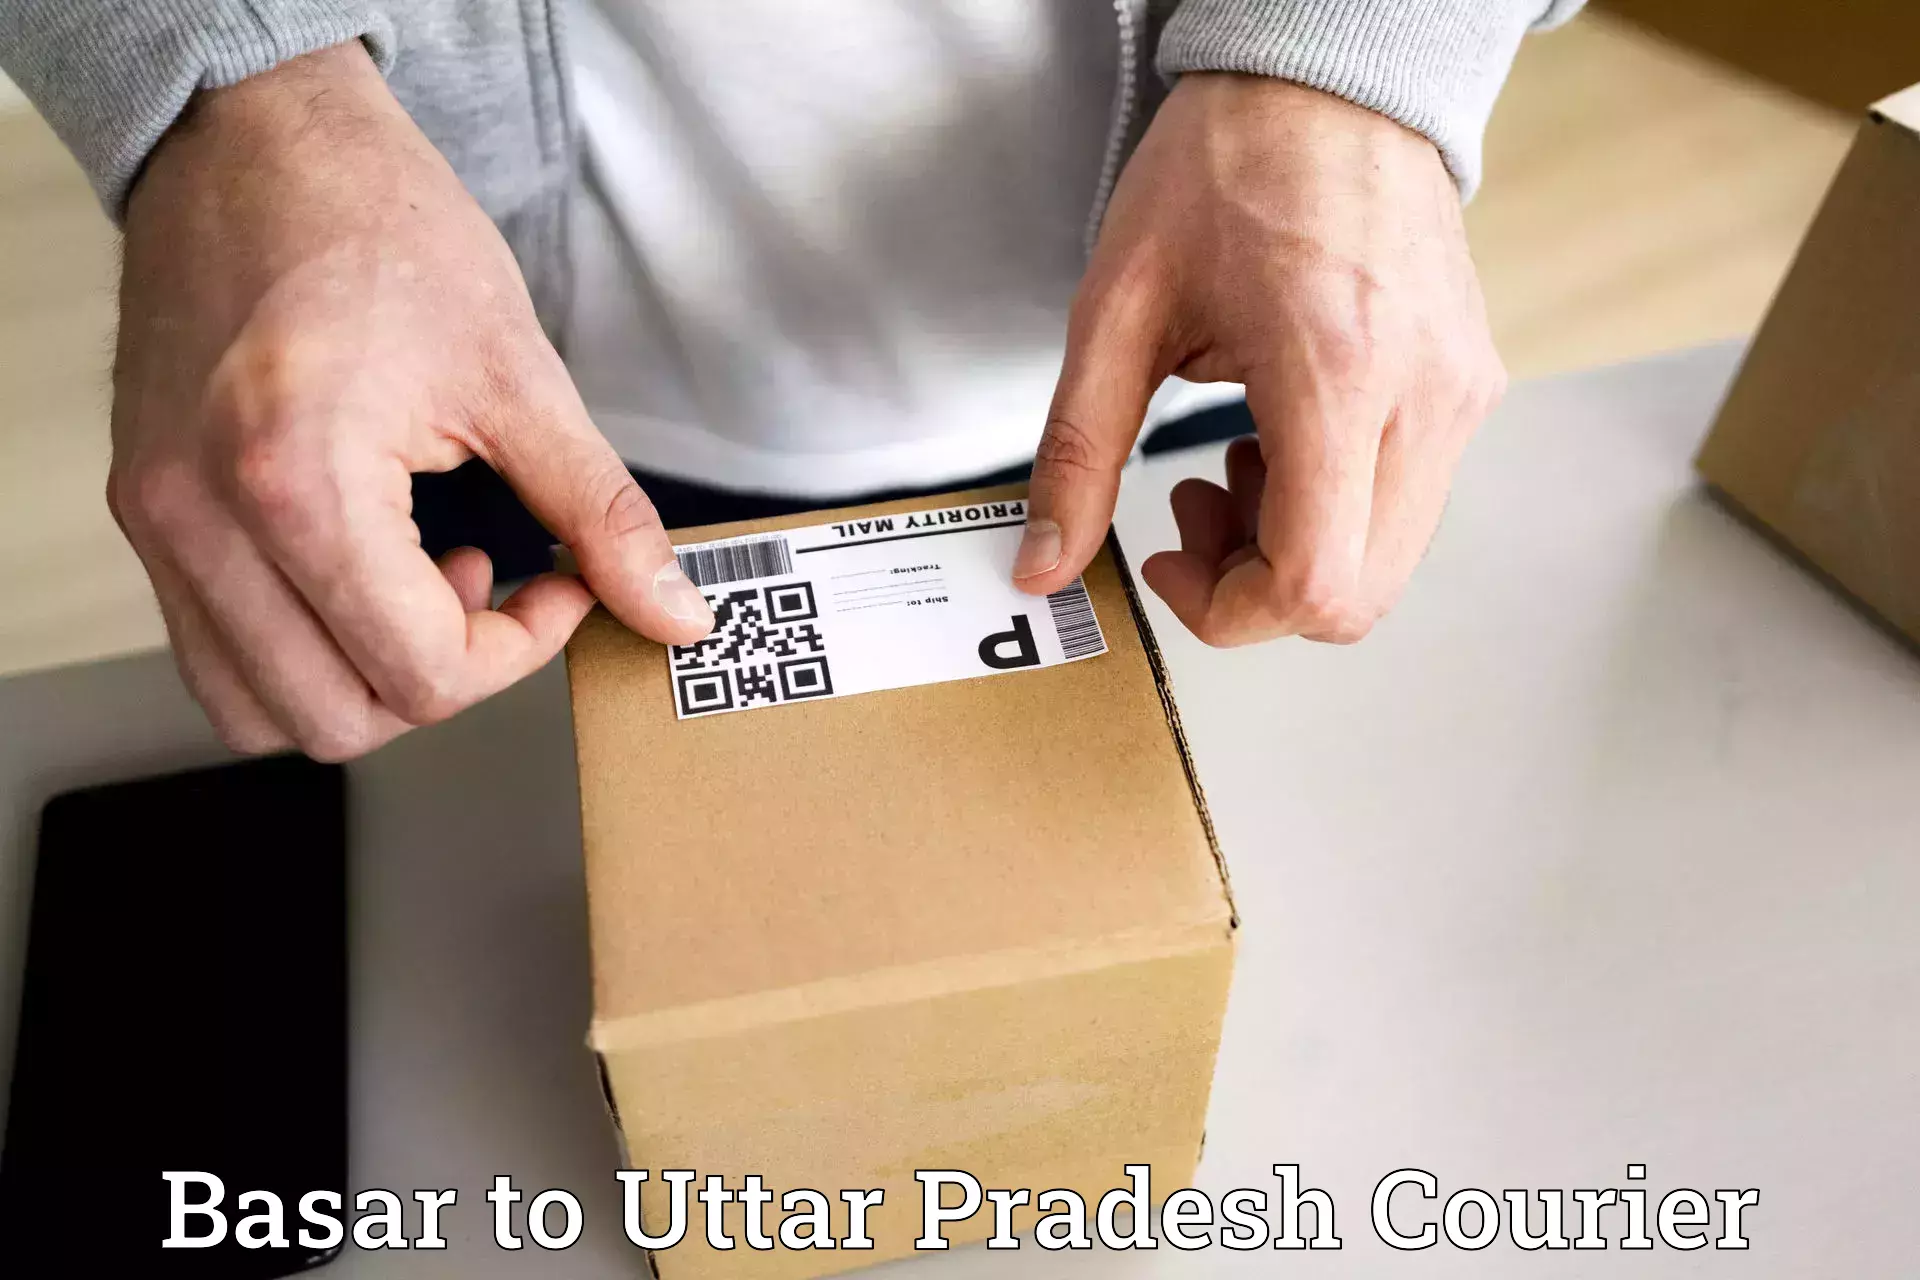 Courier service partnerships Basar to Uttar Pradesh